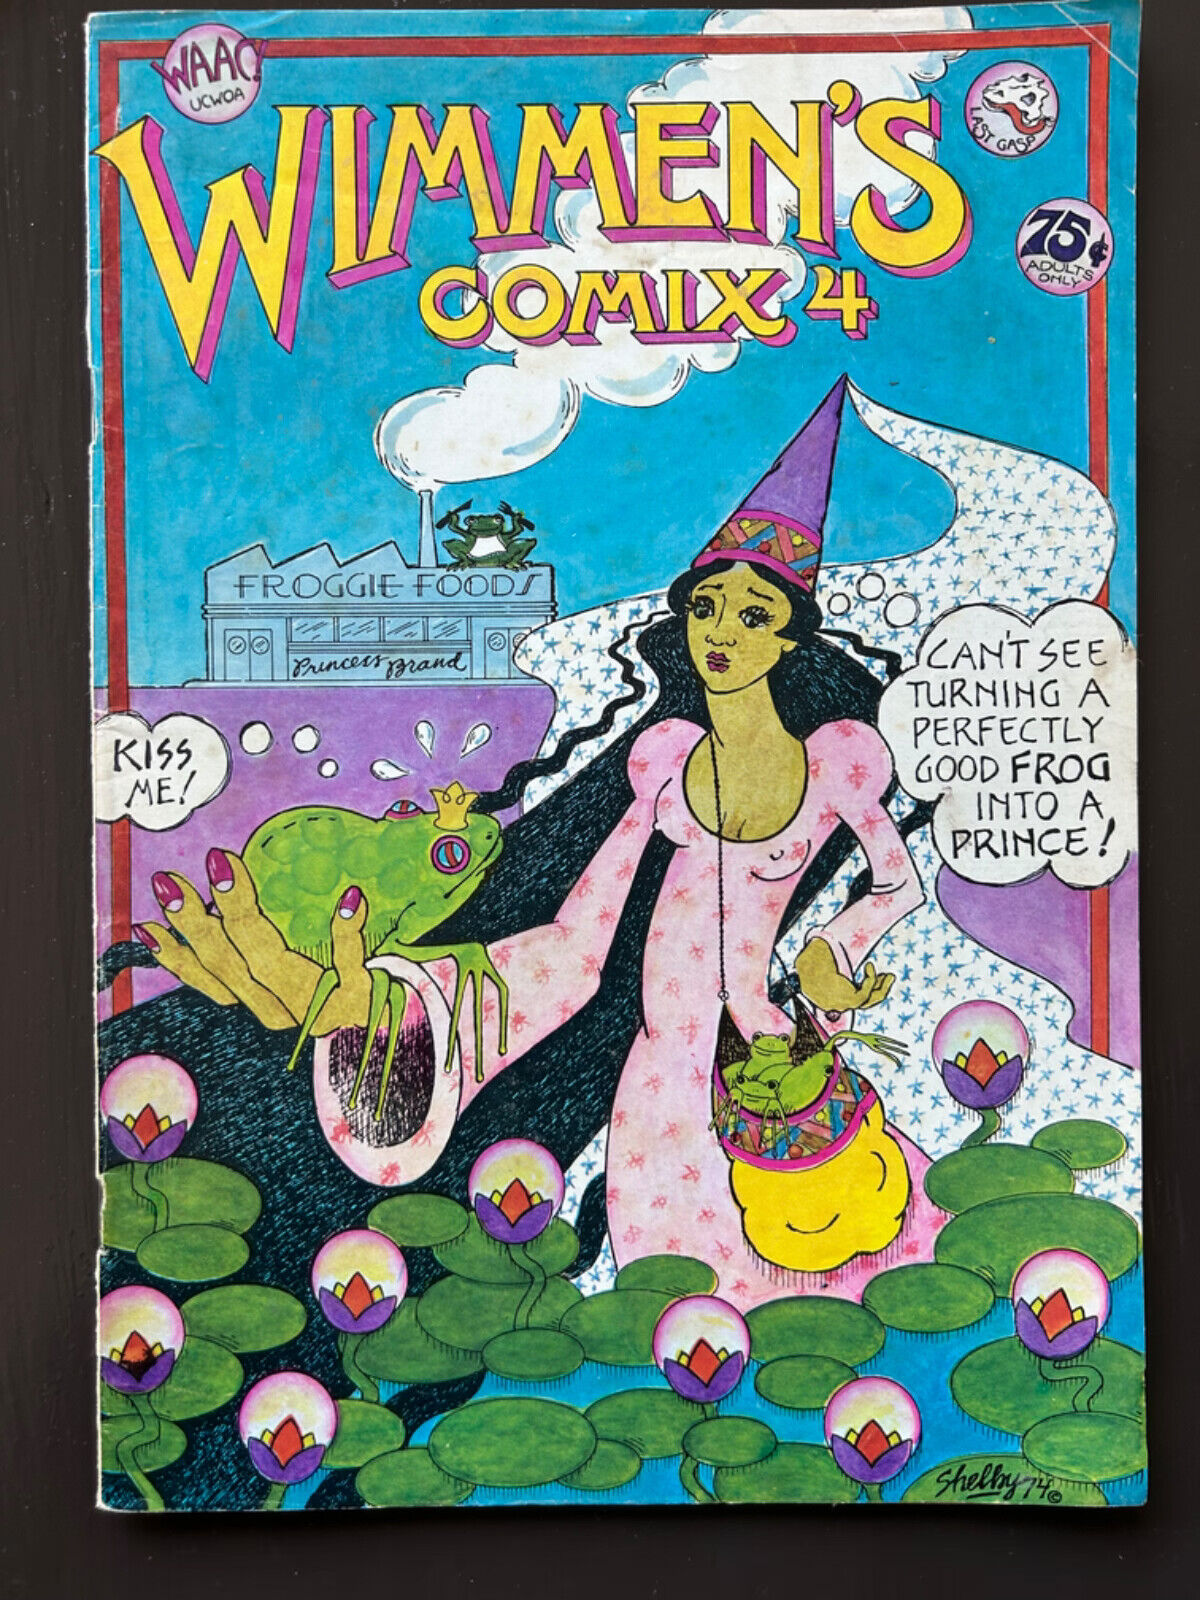 Wimmen's Comix #4 VF/NM 9.0 - LGBTQA - Trans Story - 1st Print Underground Comic